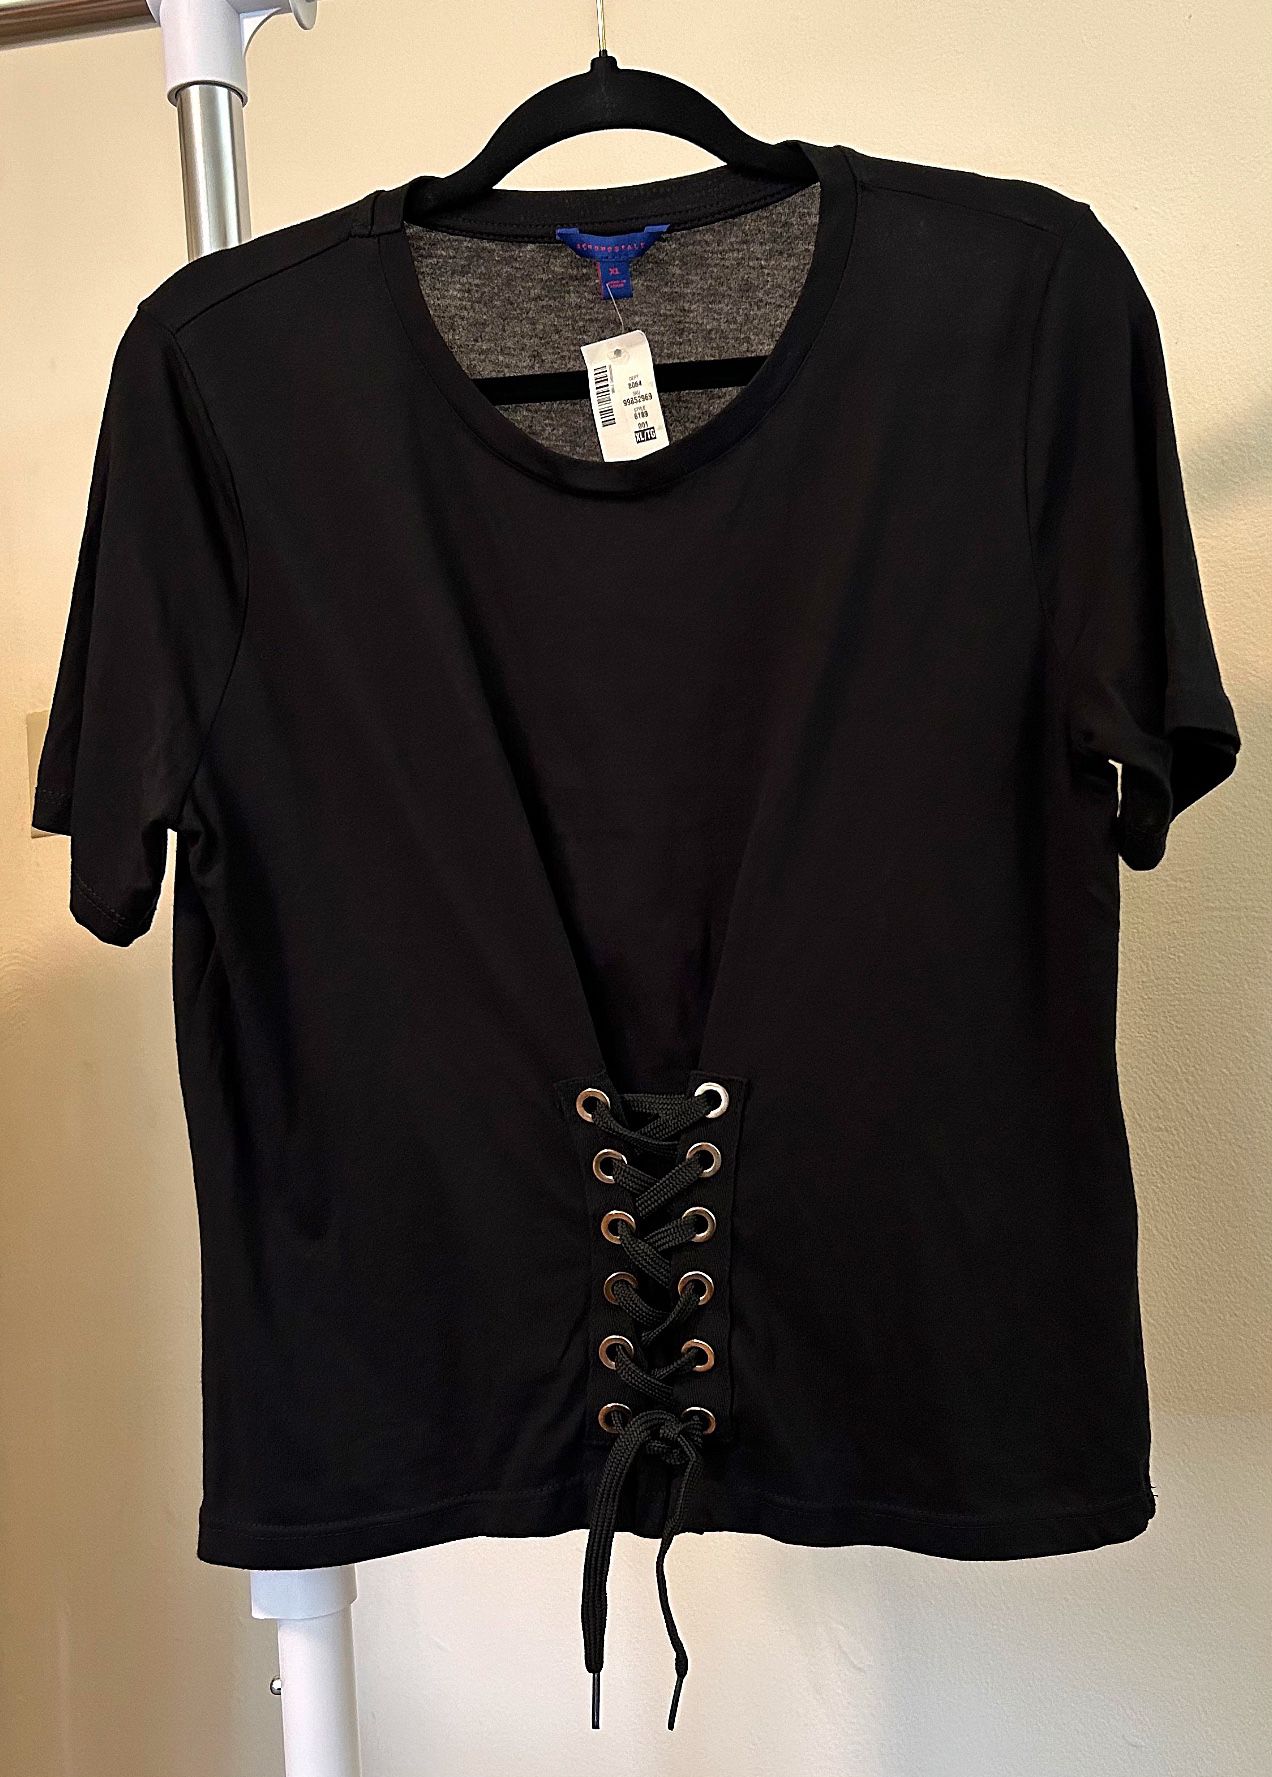 Aeropostale Brand Black Crop Dressy Top Size XL